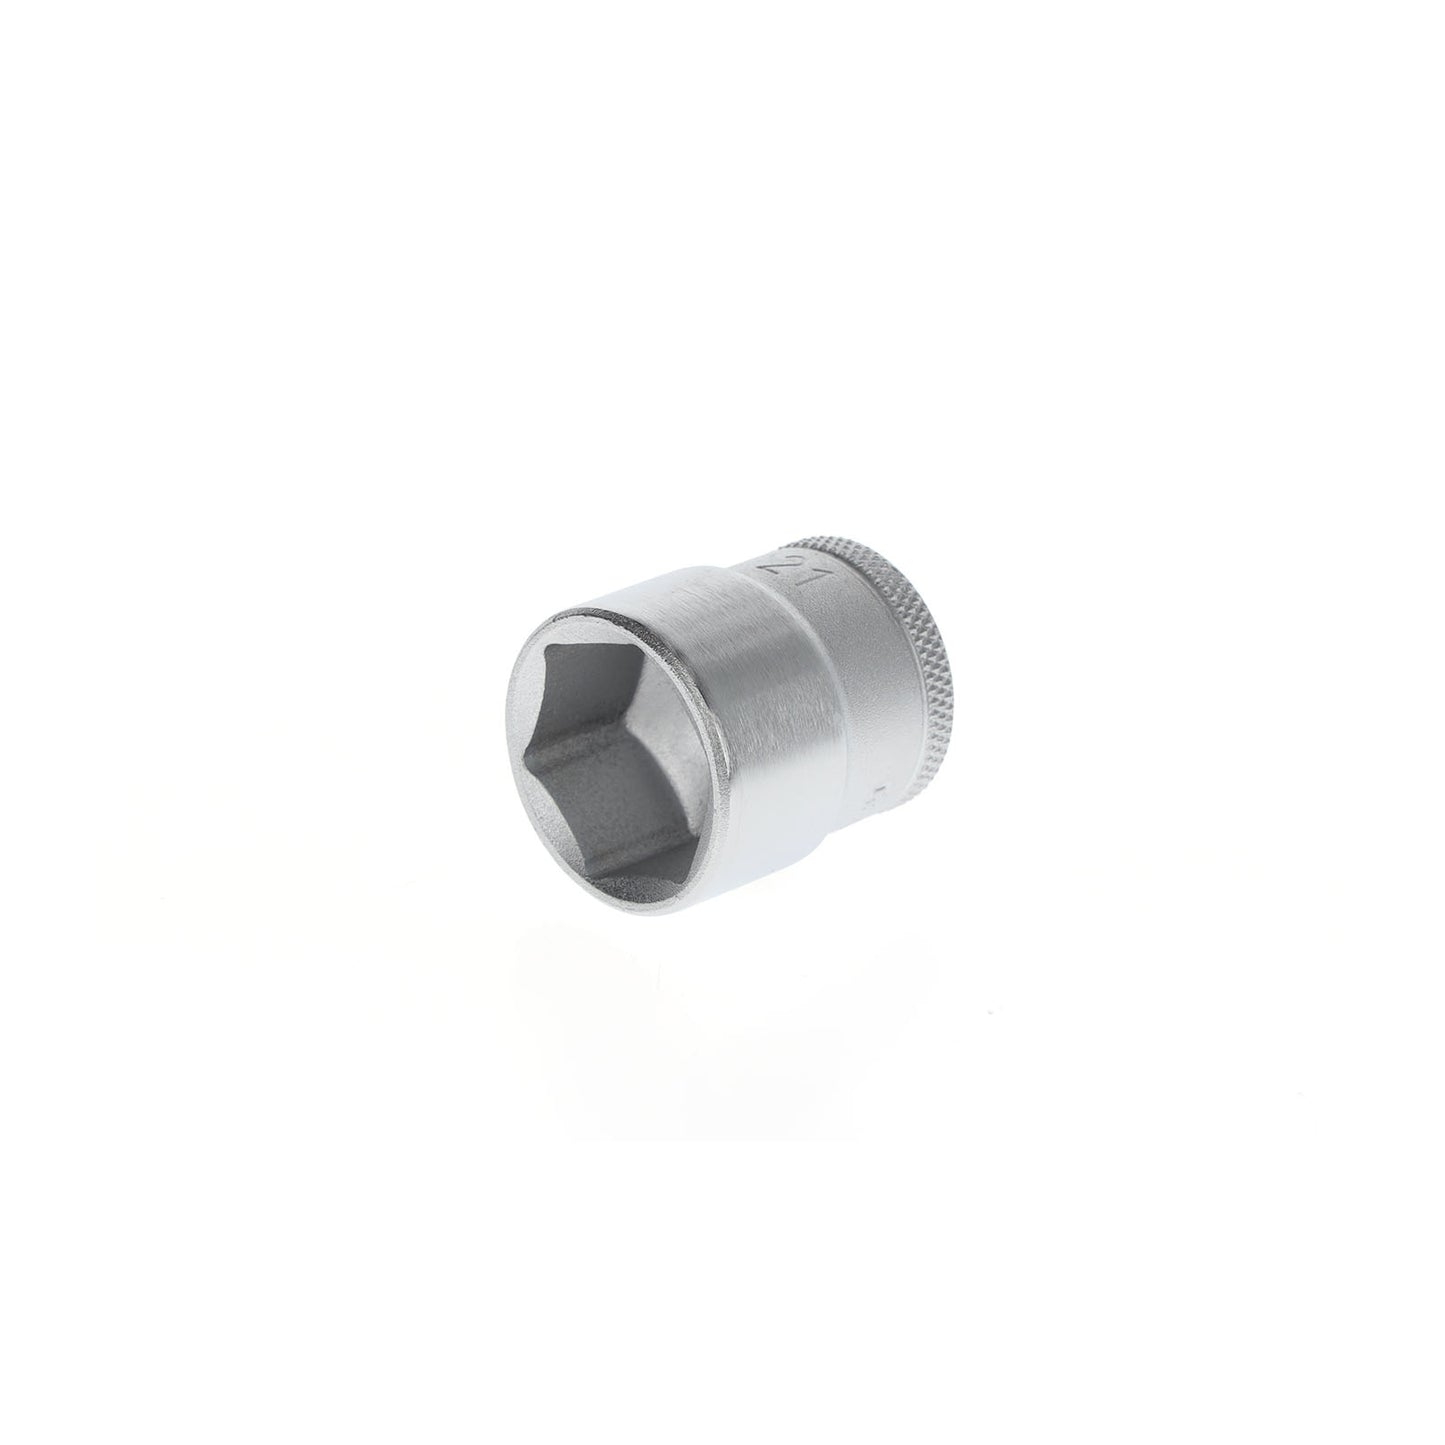 GEDORE 30 21 - Hexagonal socket 3/8", 21 mm (6234900)